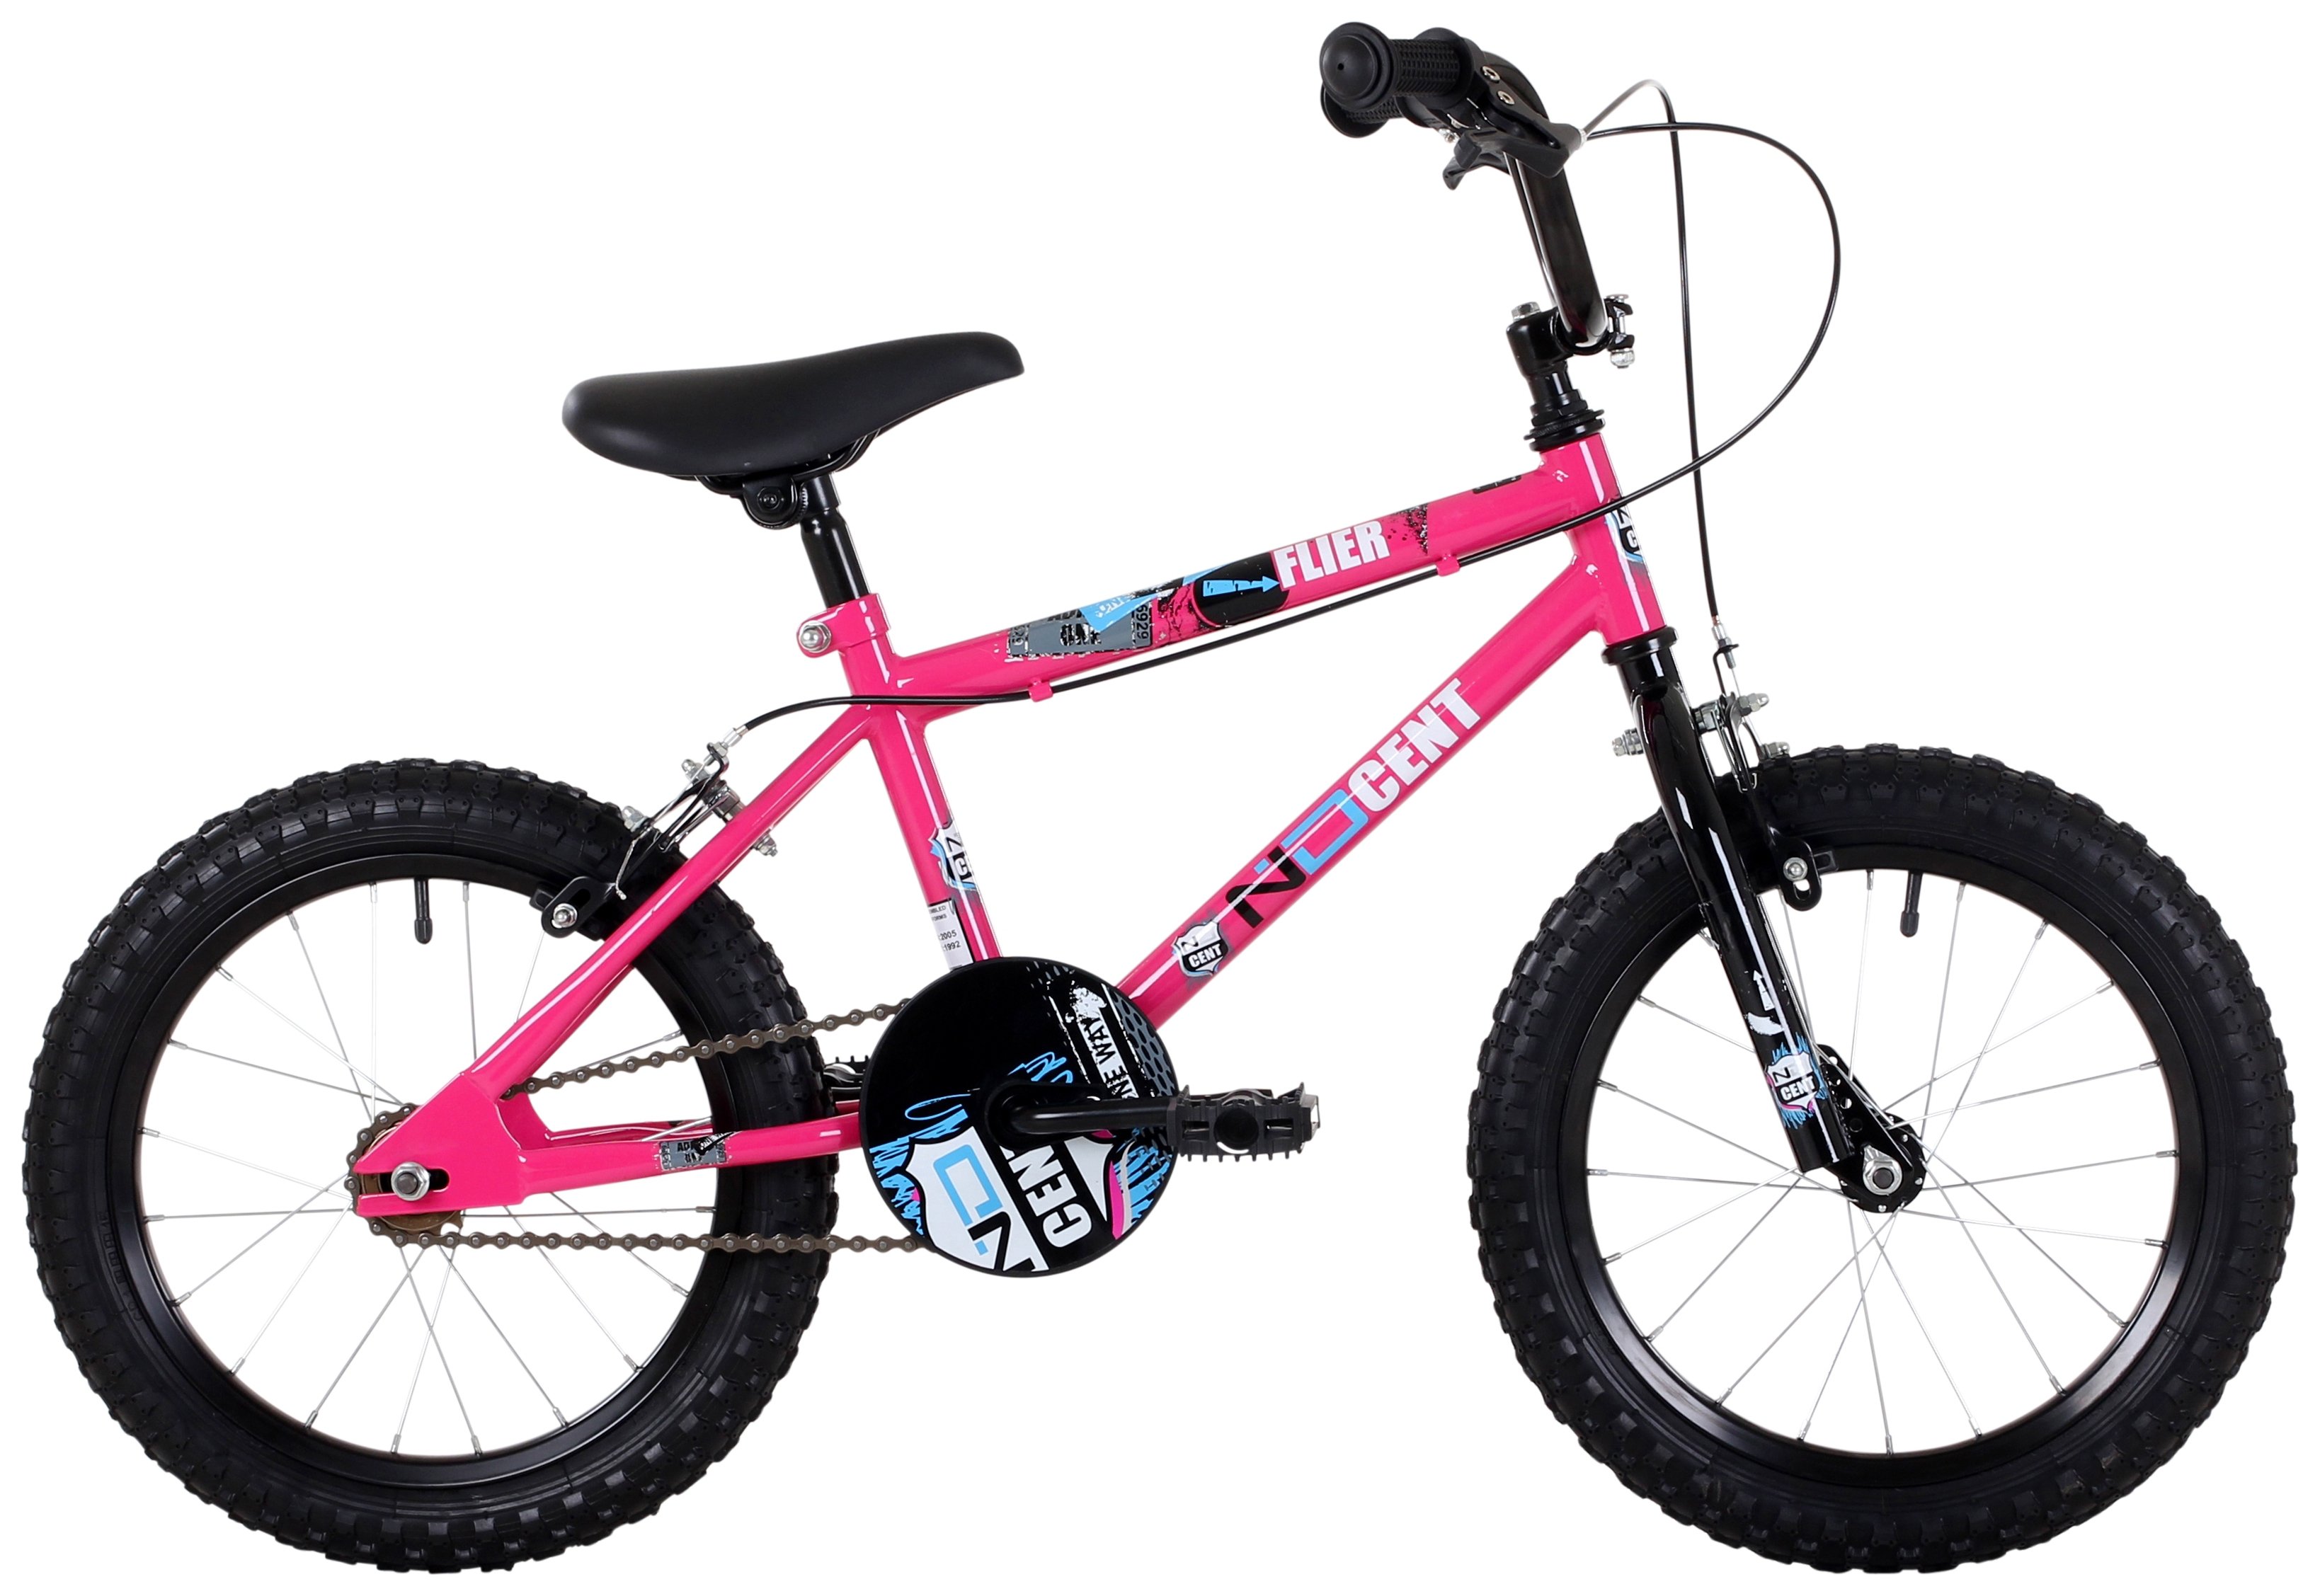 NDCENT Flier 16 Inch BMX Bike - Pink